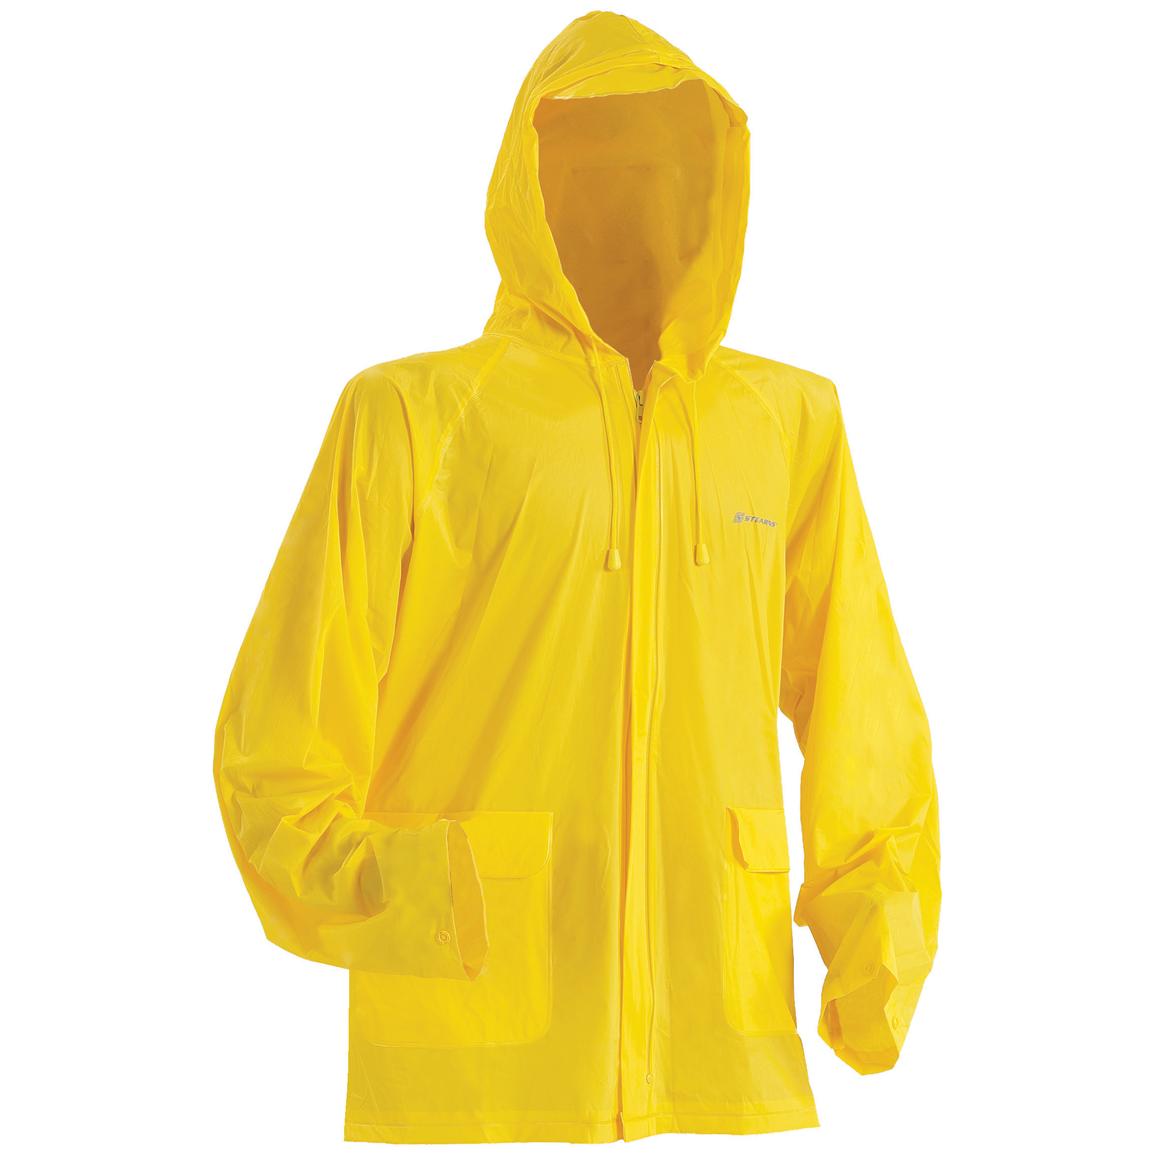 Rainjammer PVC Rain Suit - 109774, Rain Jackets & Rain Gear at ...